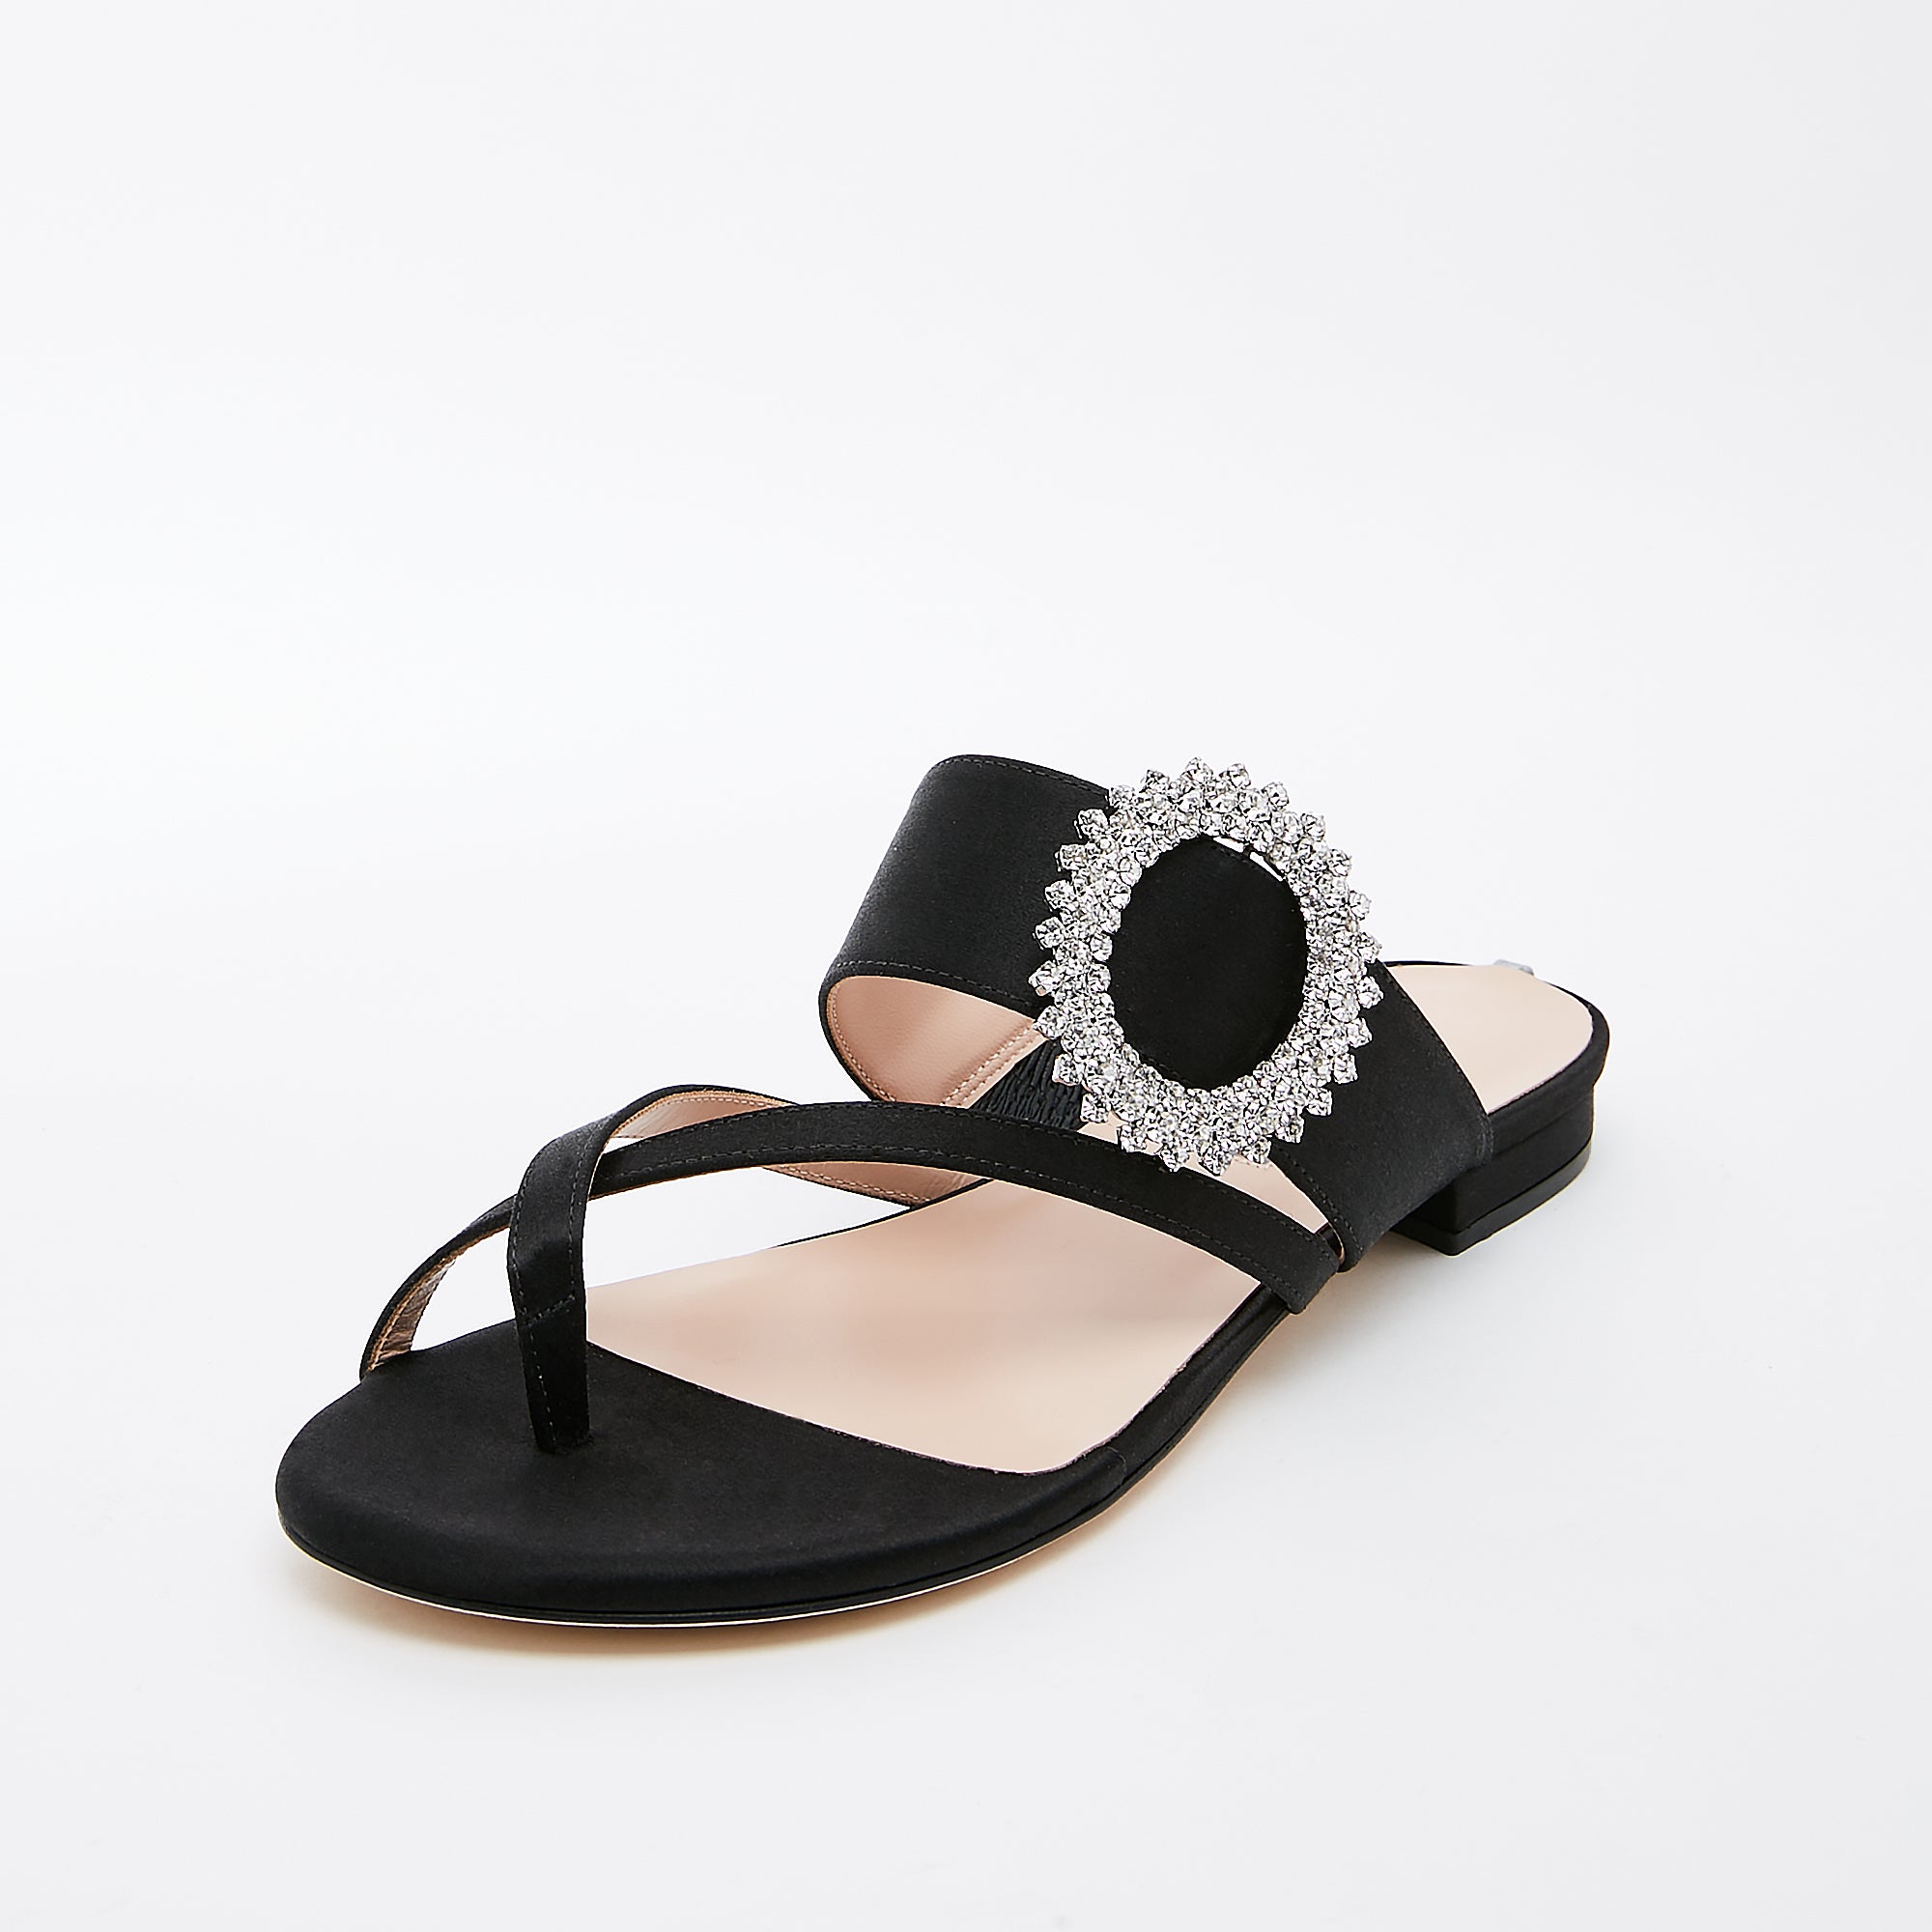 SJP by Sarah Jessica Parker Jinx 10mm Black Satin Sandals